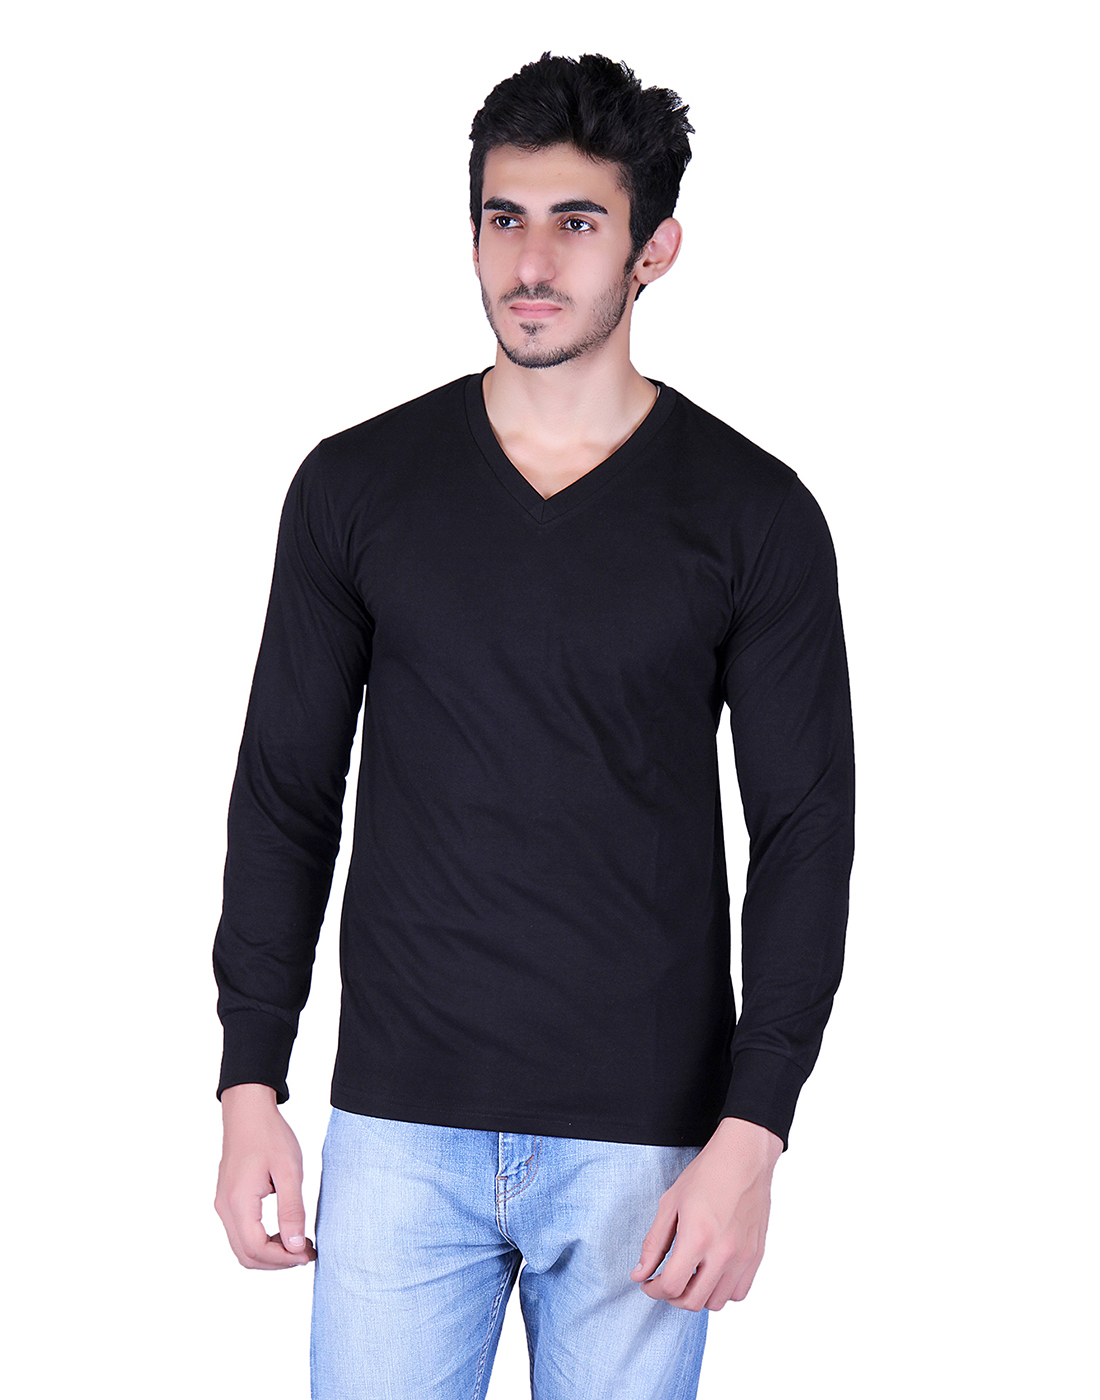 Buy Gents v/n solid black tshirt Online @ ₹376 from ShopClues